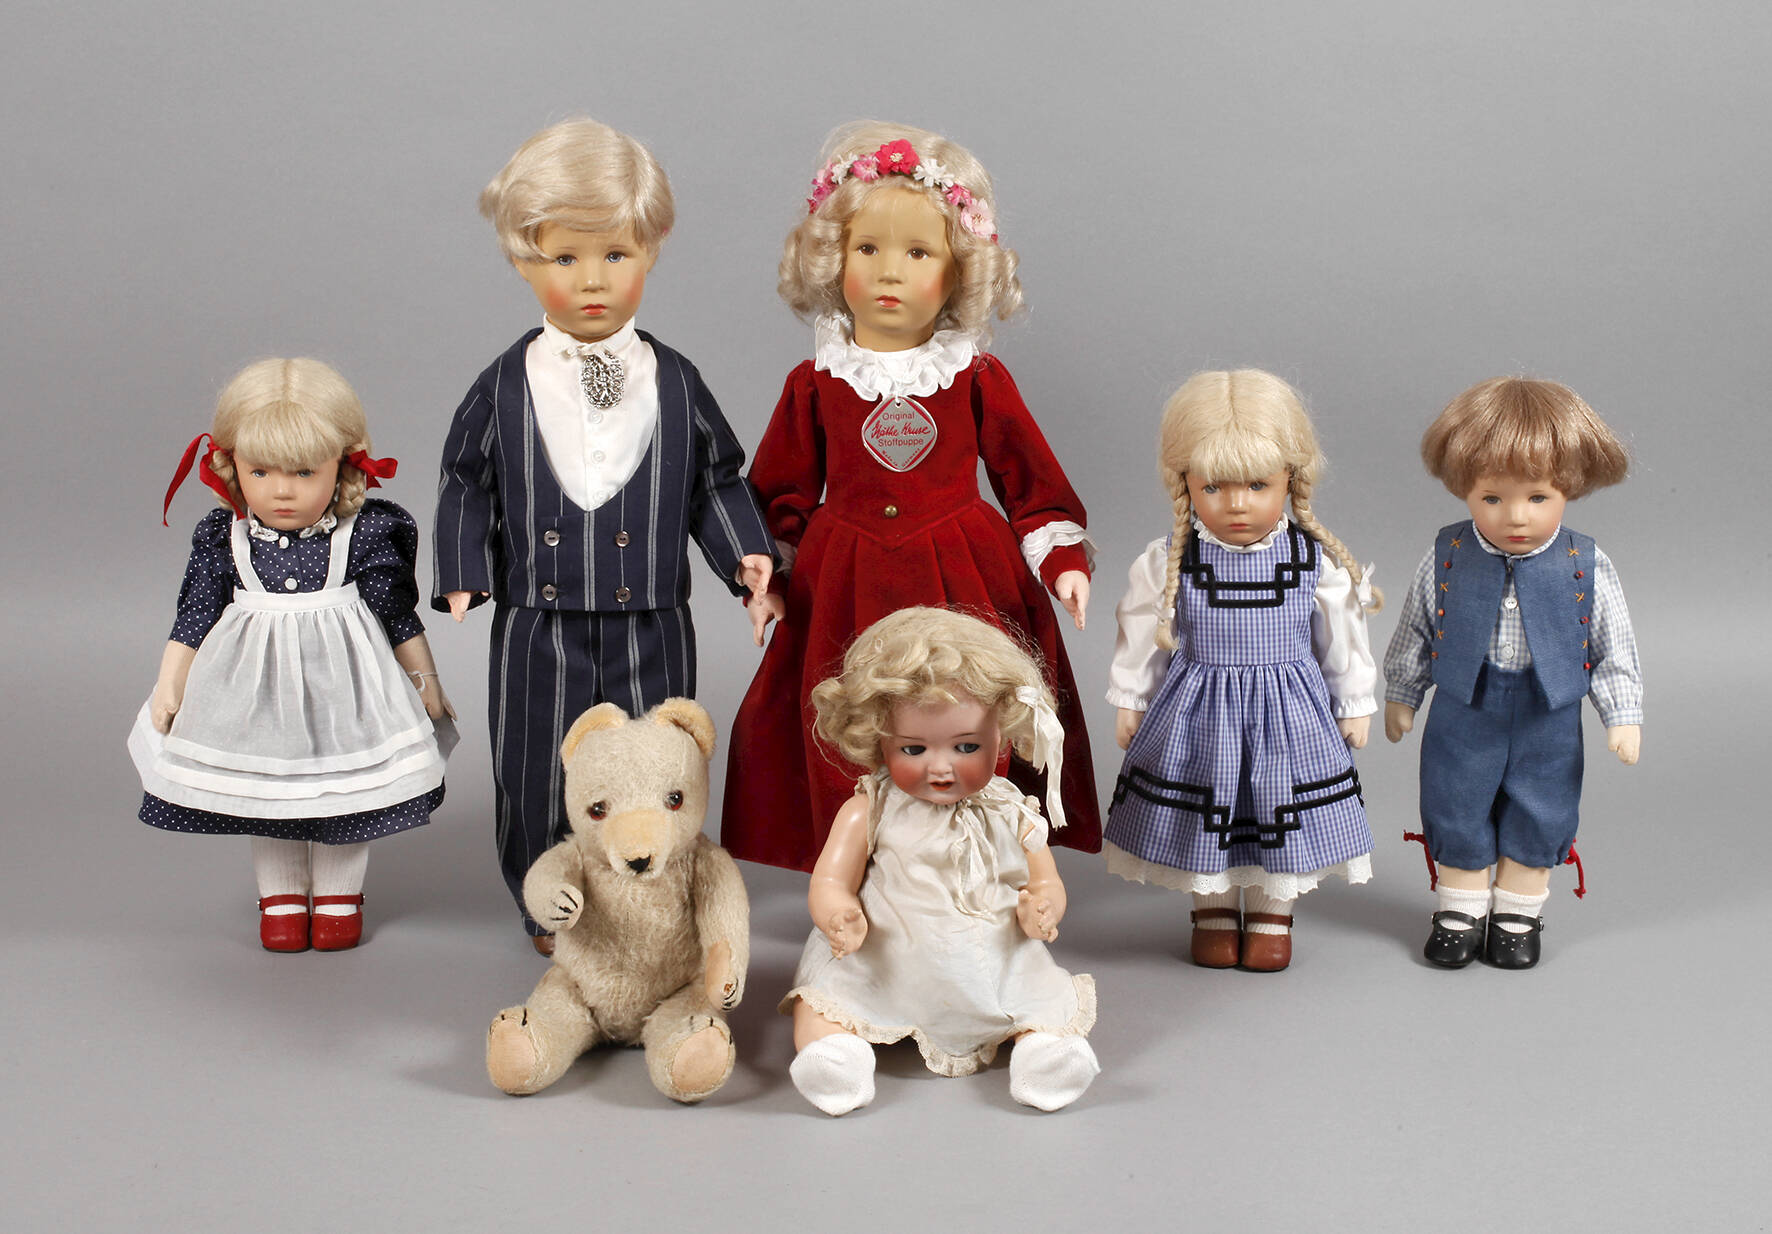 Sammlung Käthe Kruse Puppen und Teddy